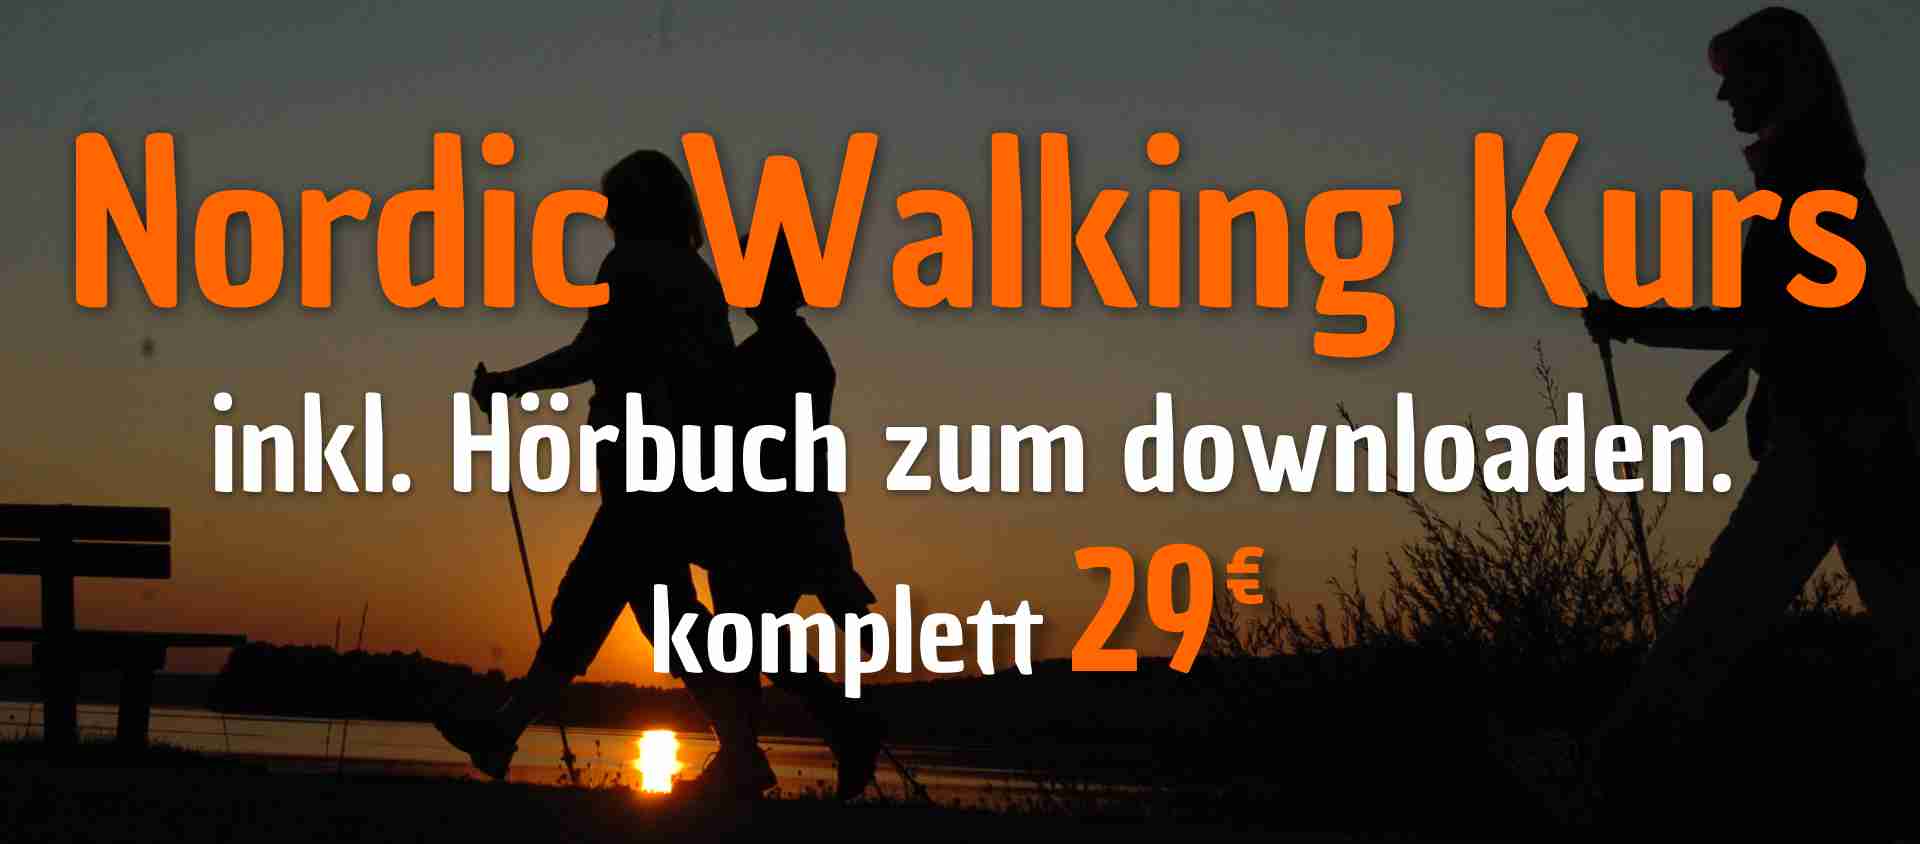 Nordic Walking kurs inklusive Hörbuch